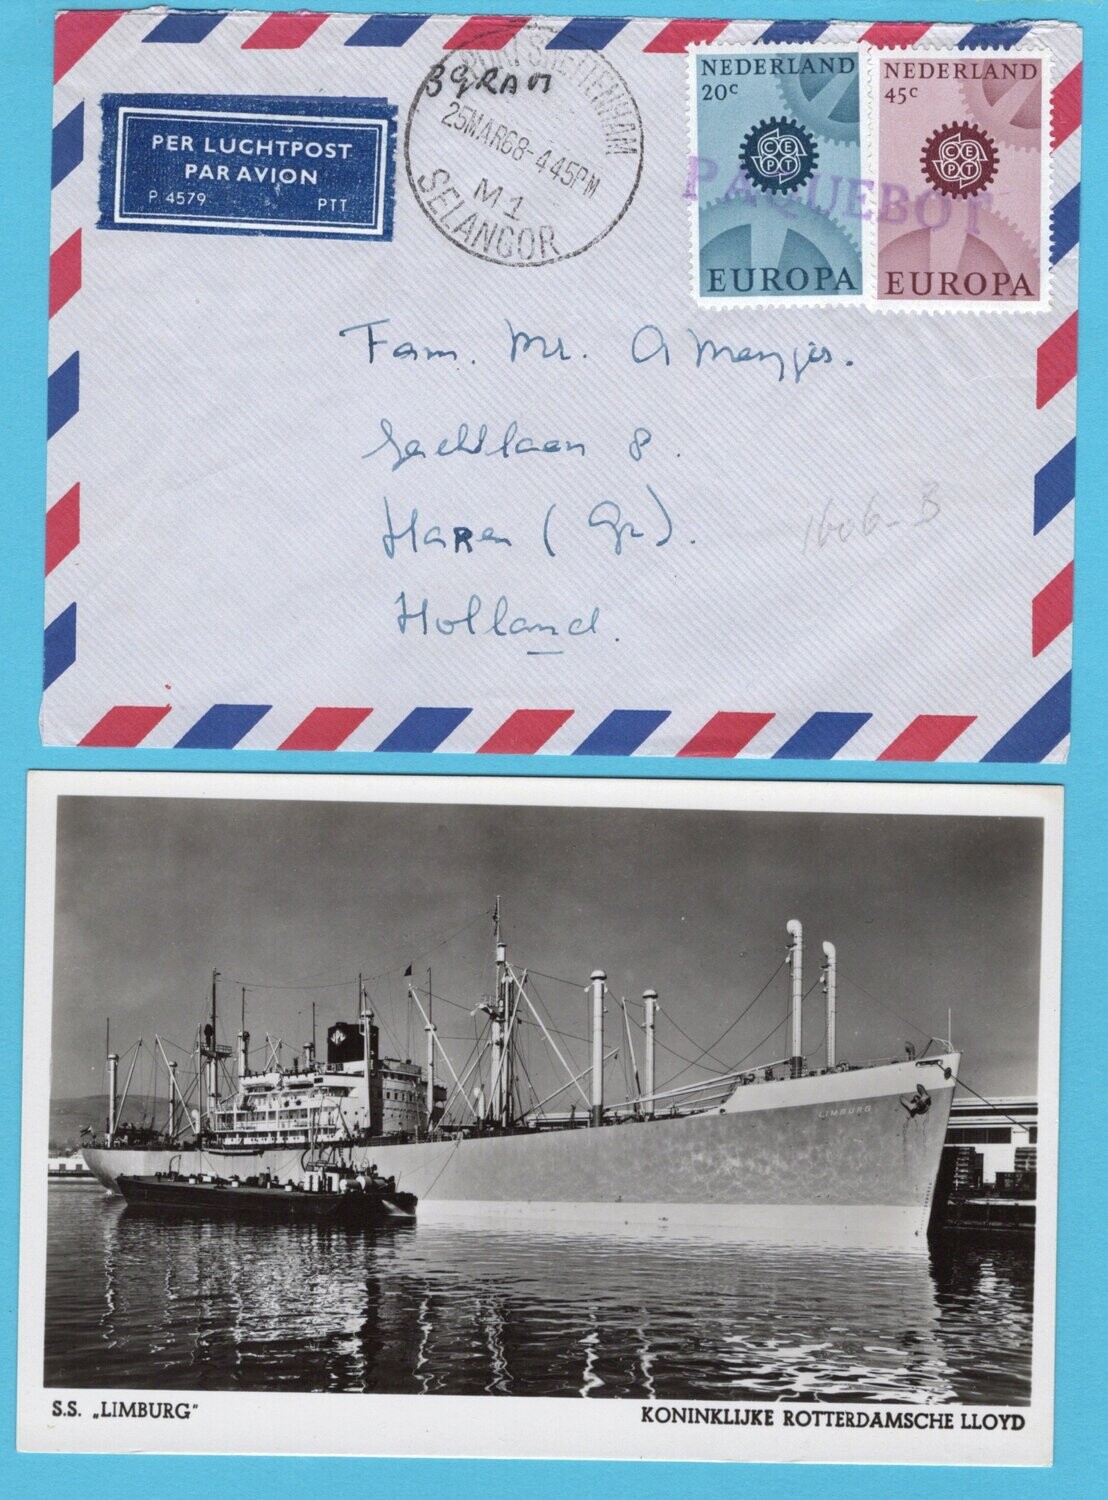 NEDERLAND paquebot brief +kaart 1968 Port Swettenham SS Limburg